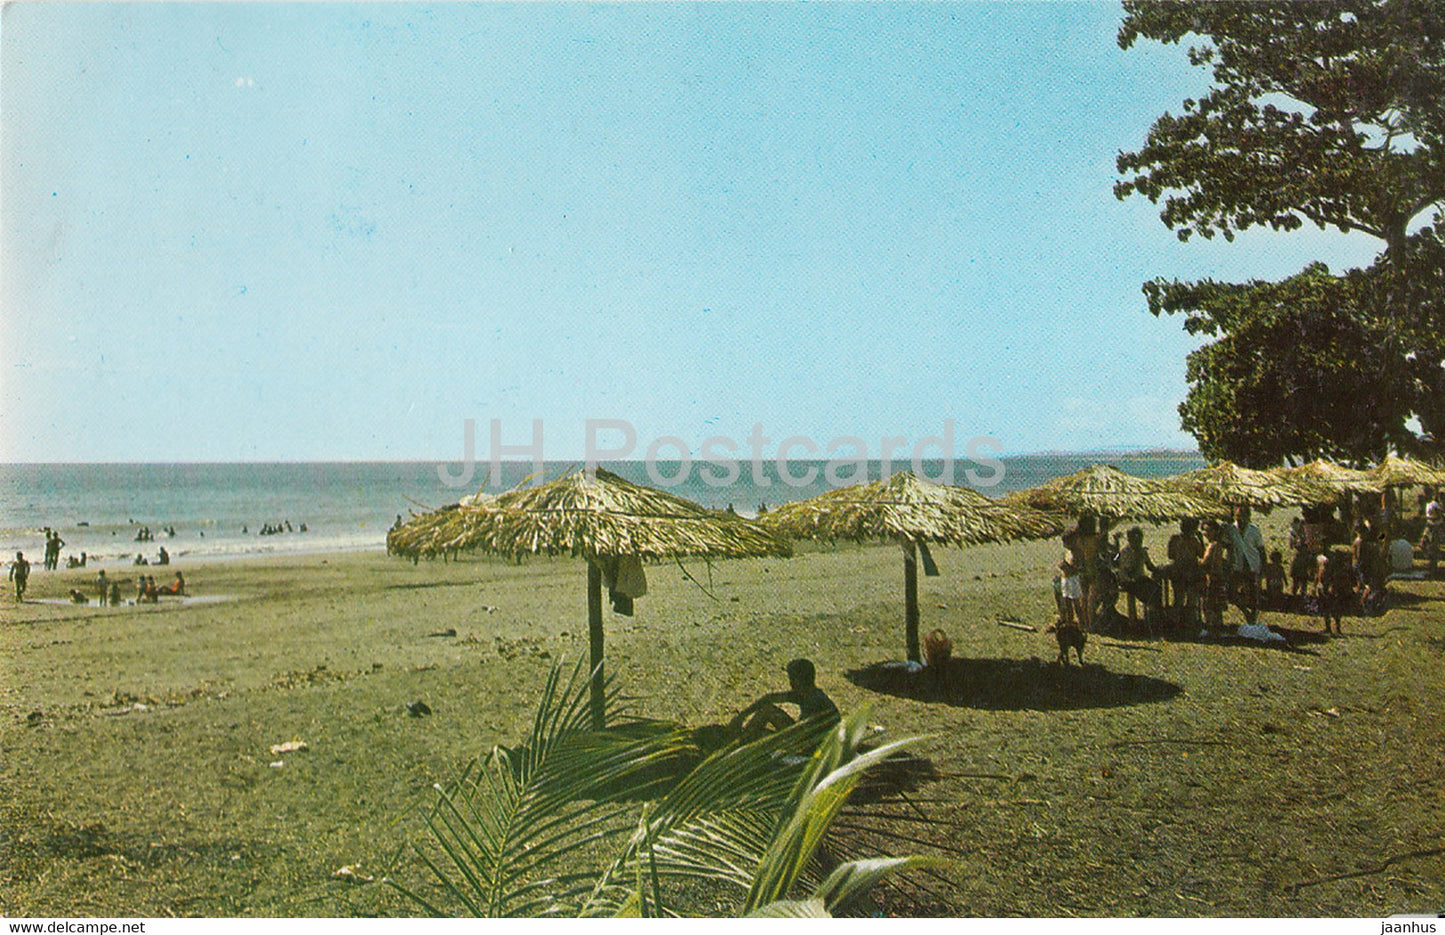 Playas El Cocal - beach - 1982 - Costa Rica - used - JH Postcards